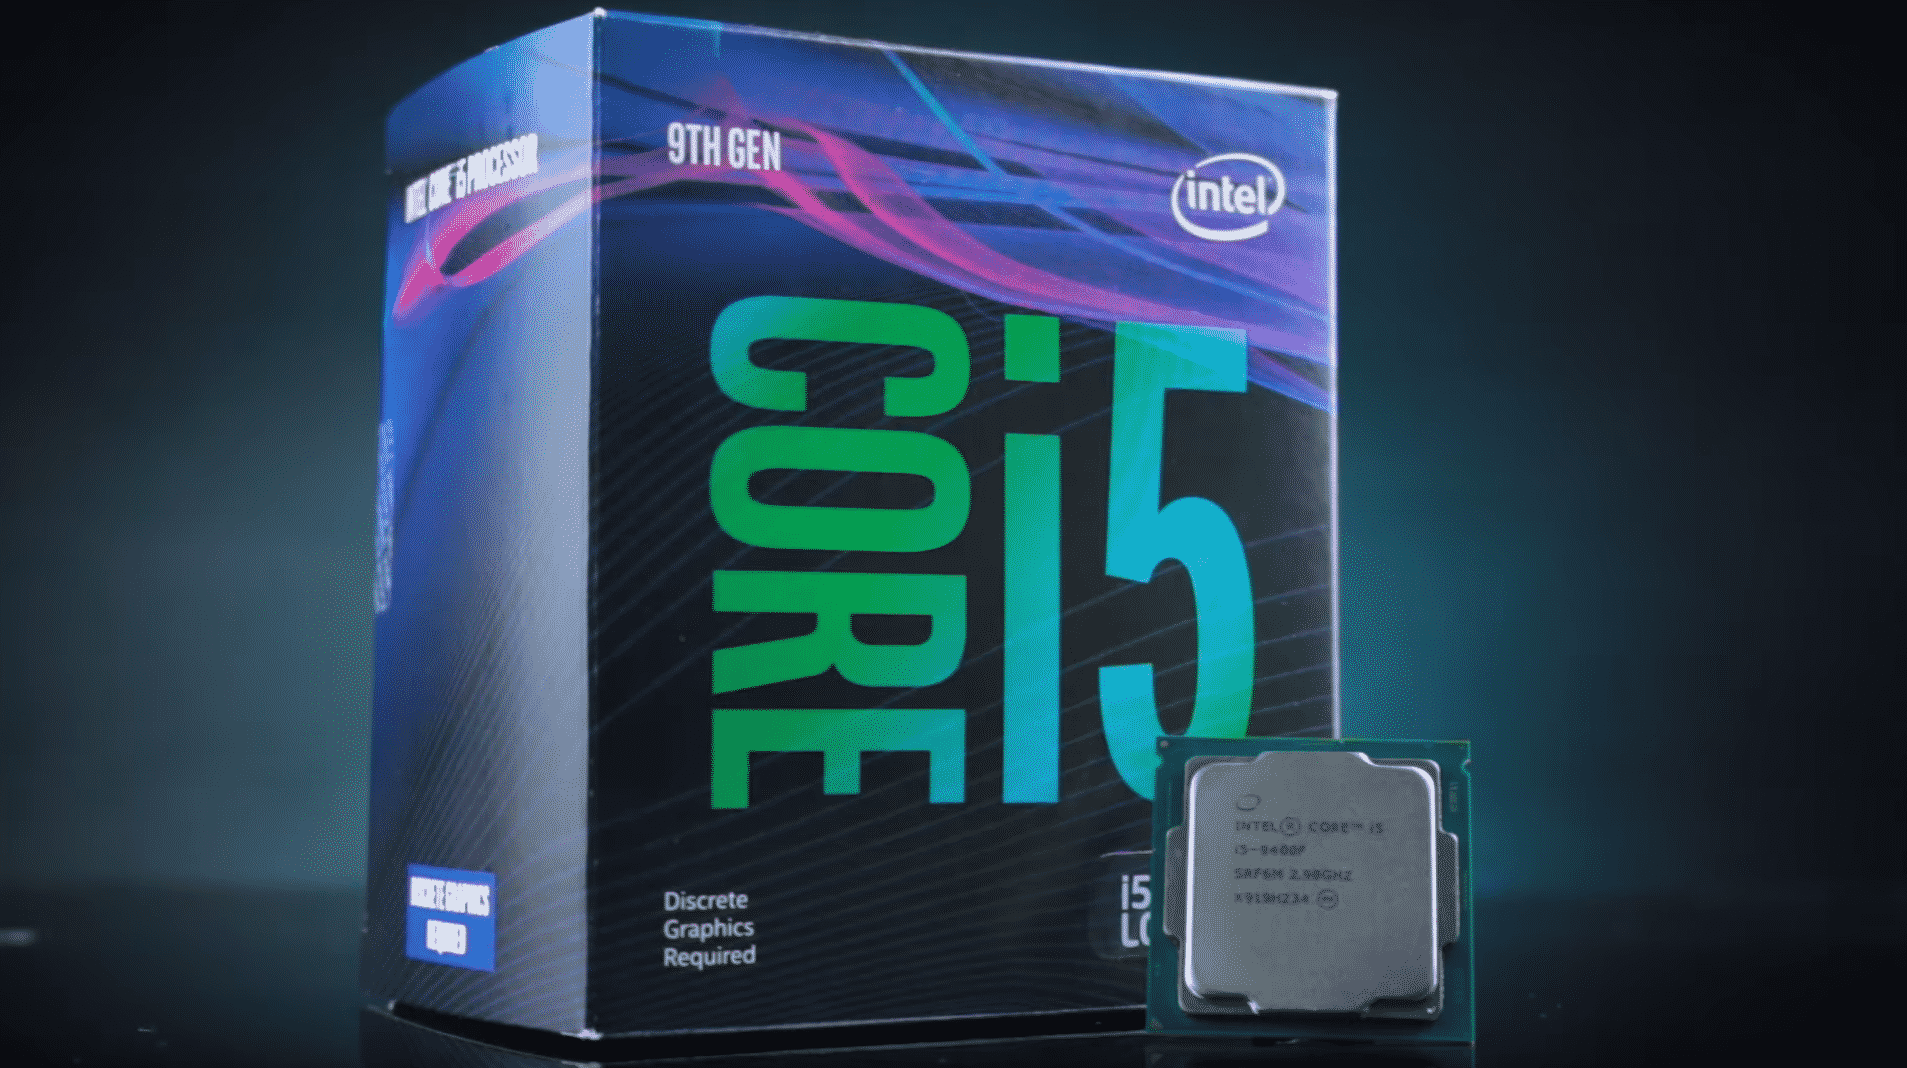 Интел коре i5 9400f. Процессор Intel Core i5-9400f. Core TM i5 9400f. Intel i3 9400. Intel Core i5 9400 KF.